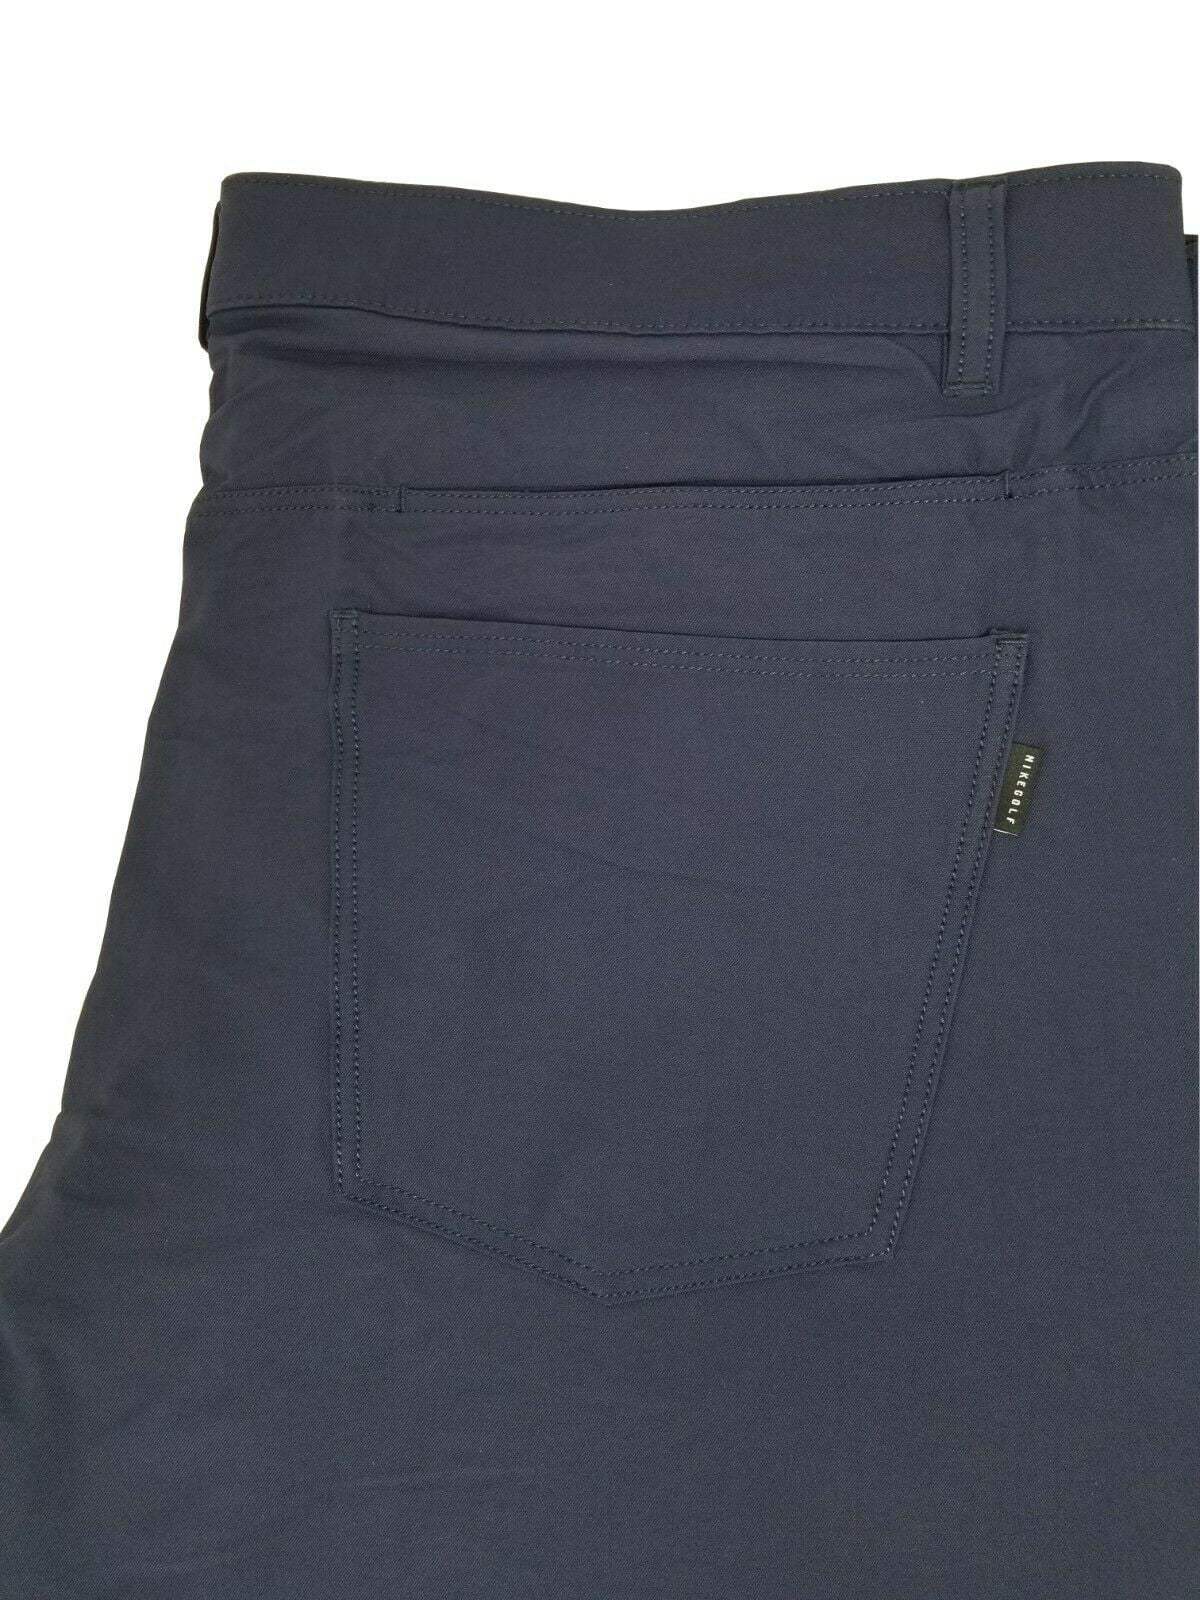 pasta Fascinante Discreto Nike Men's Flex Dri-Fit Slim Fit Golf Pants Navy - Size 38x32 BV0278-451 -  Walmart.com